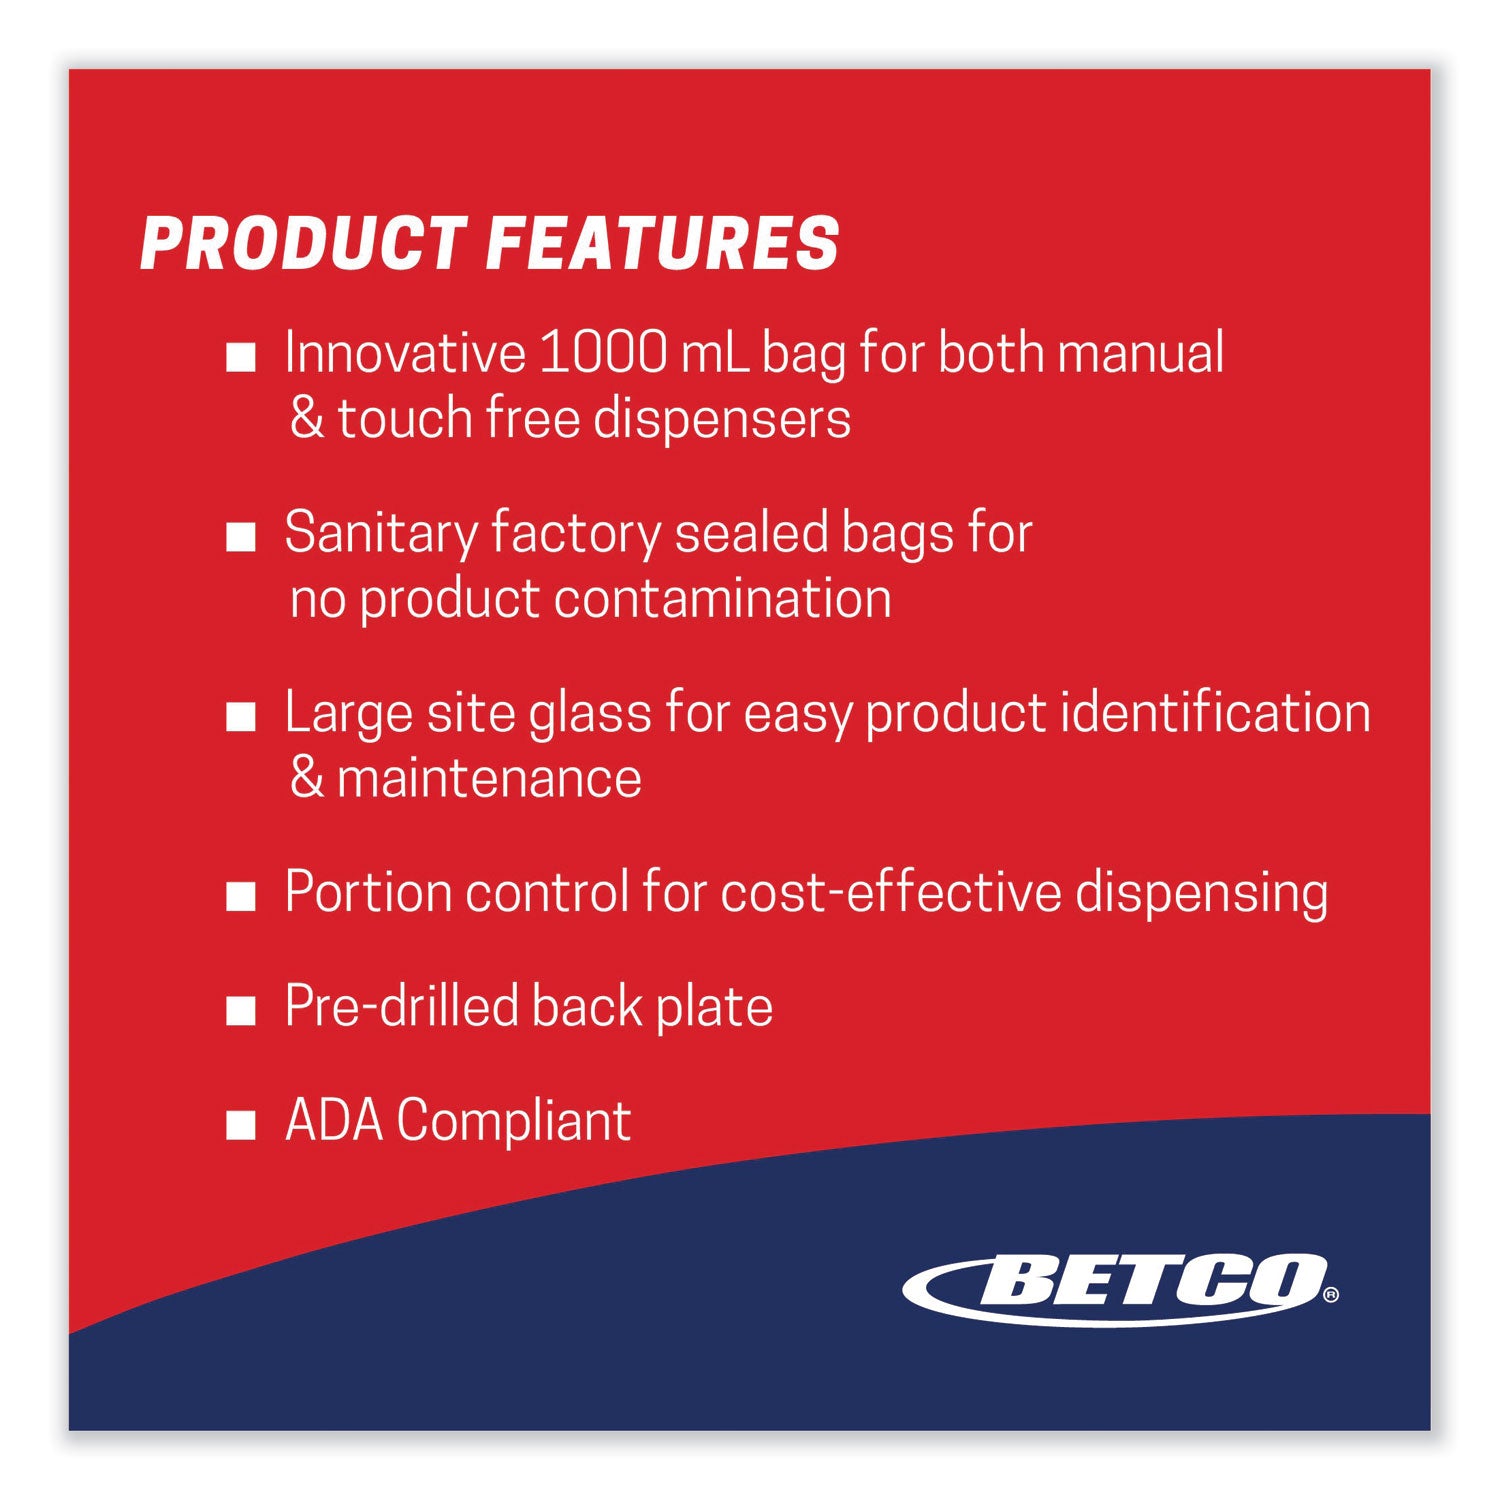 Betco Clario Manual Skin Care Foam Dispenser - Manual - 1.06 quart Capacity - Hygienic, Refillable, Site Window, Durable - White - 12 / Carton - 6